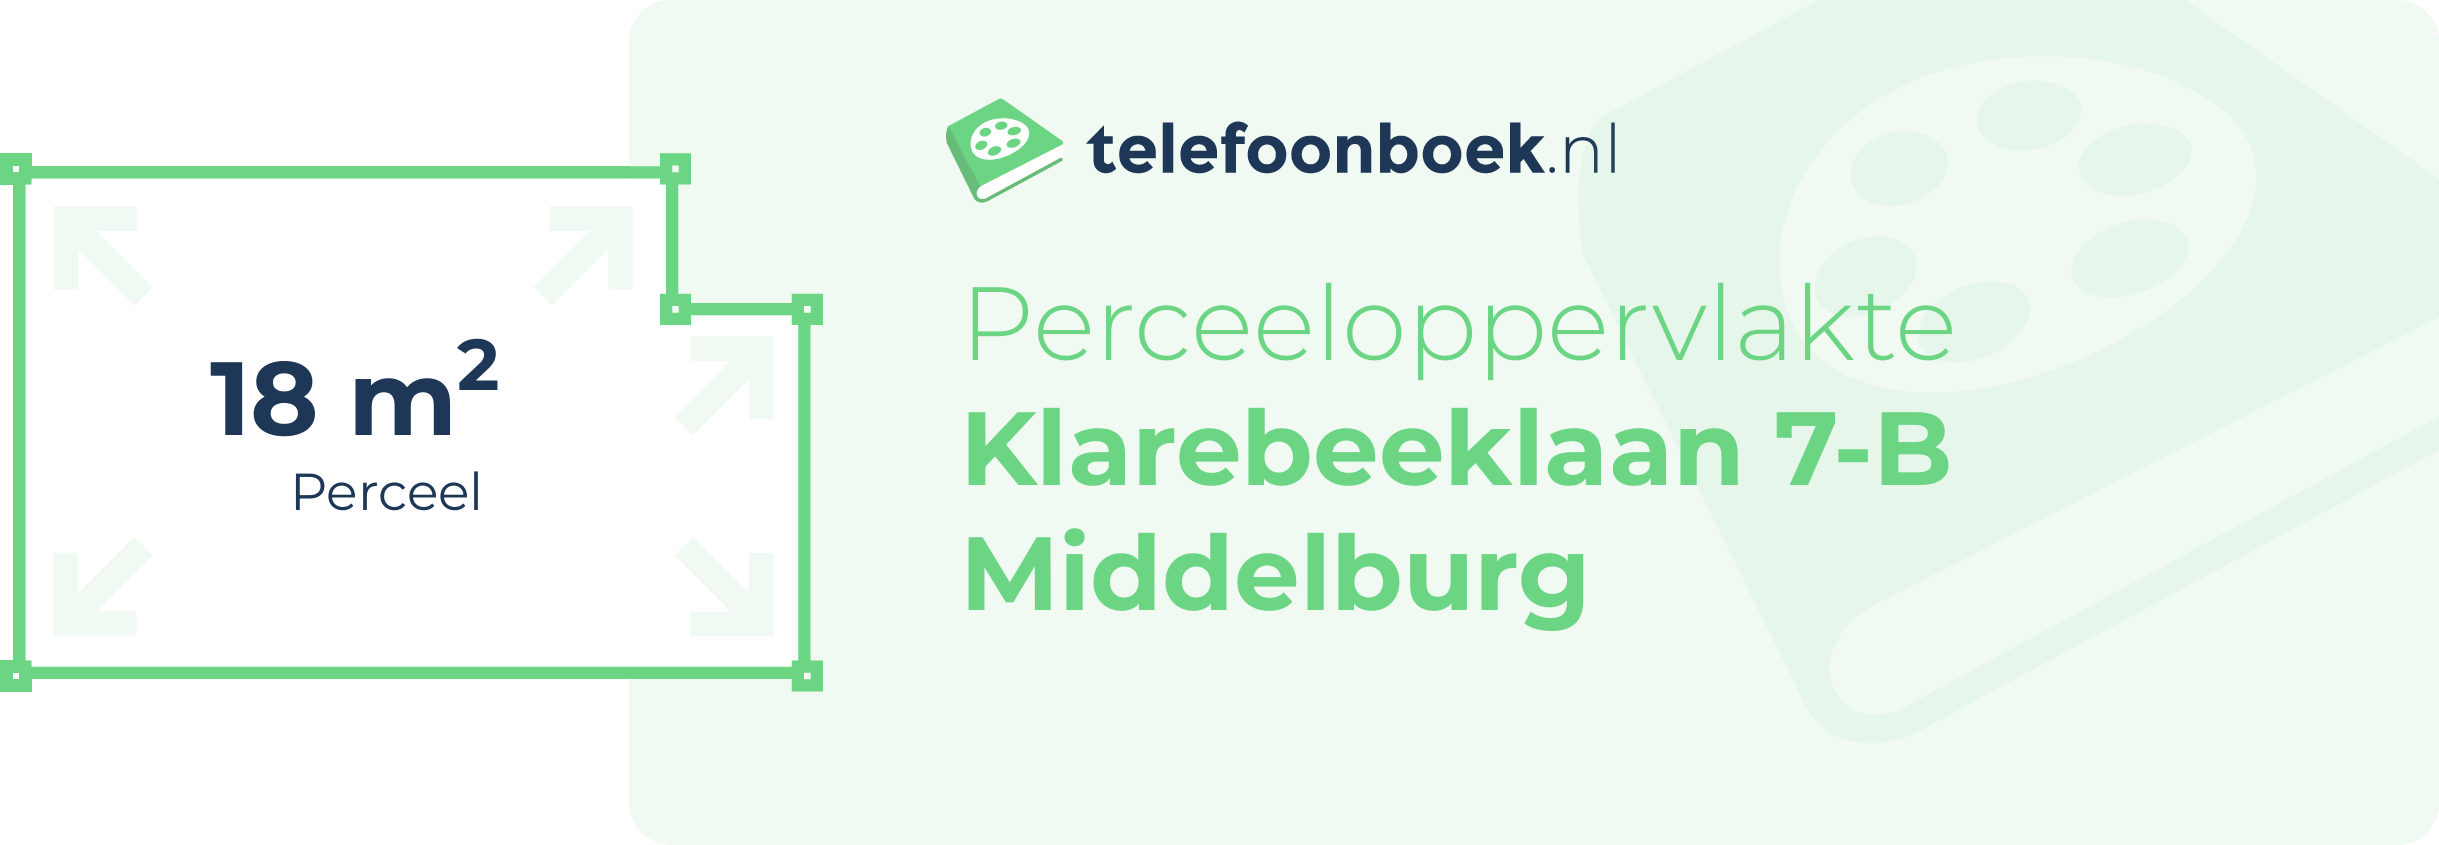 Perceeloppervlakte Klarebeeklaan 7-B Middelburg